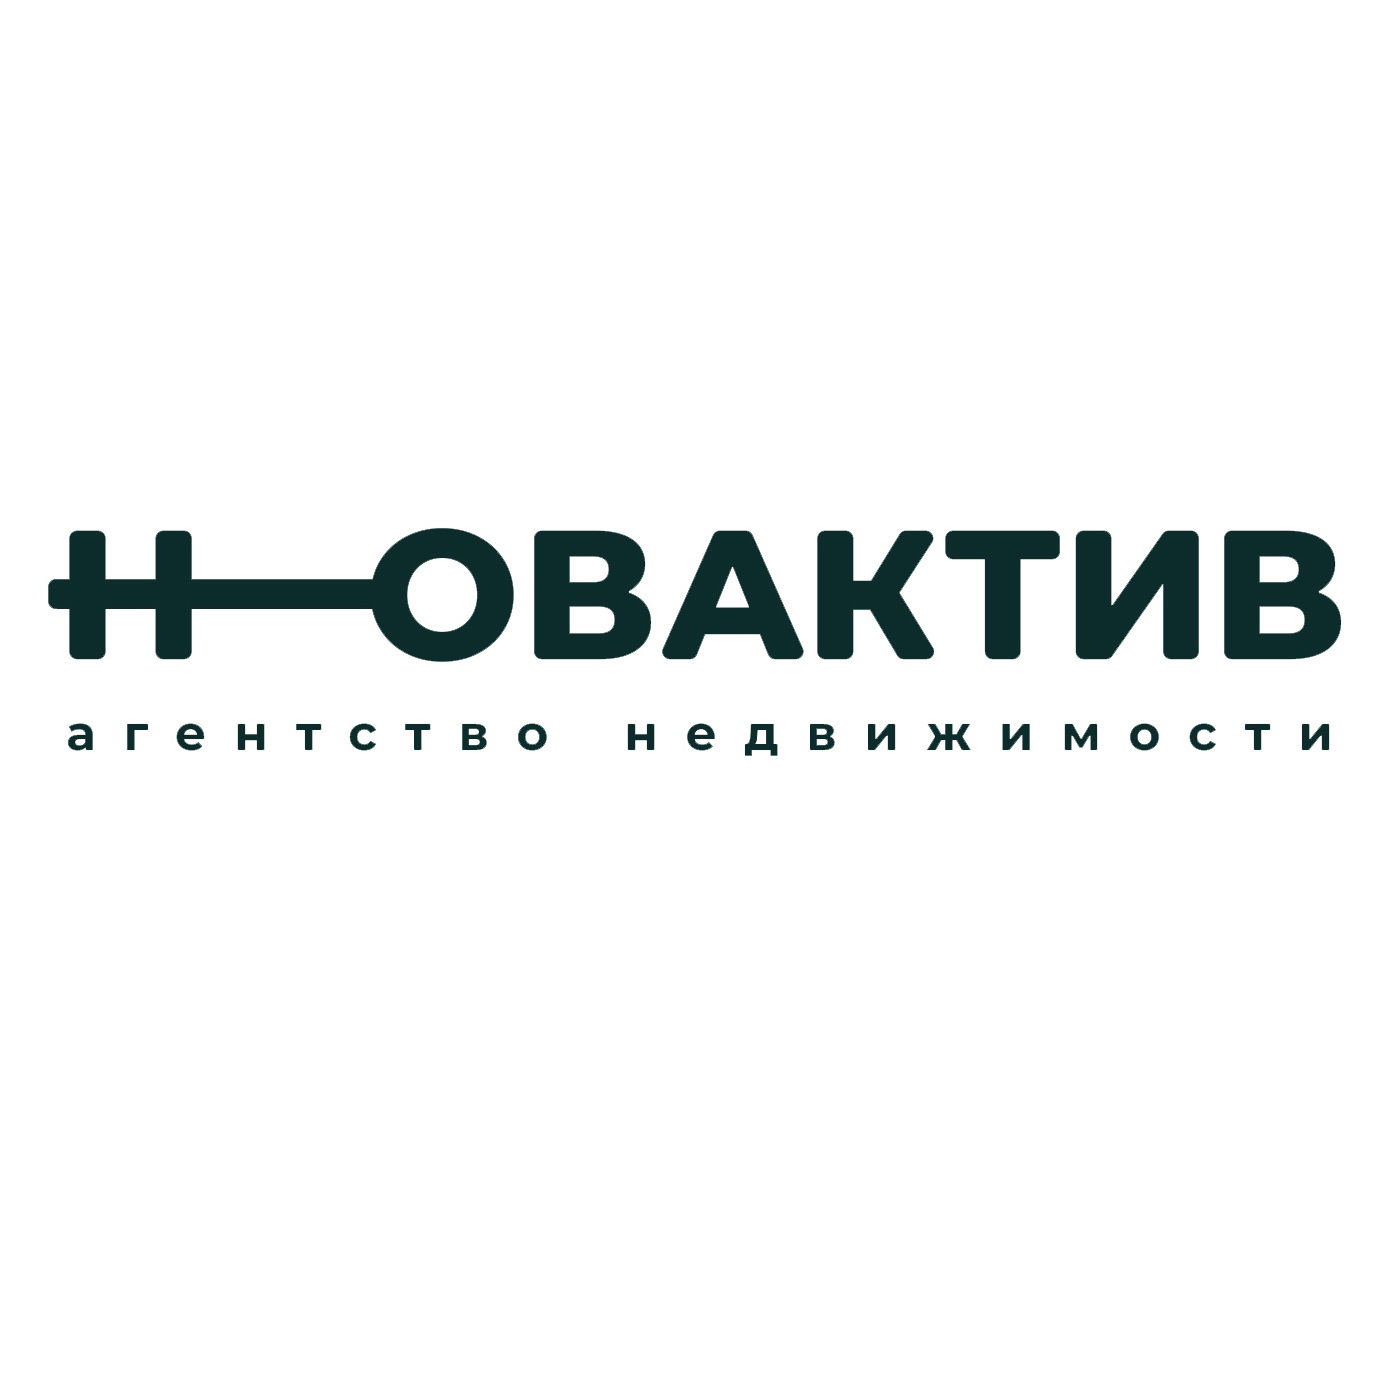 Фото / логотип АН Новактив на ул. Советская 36/1, Новосибирск